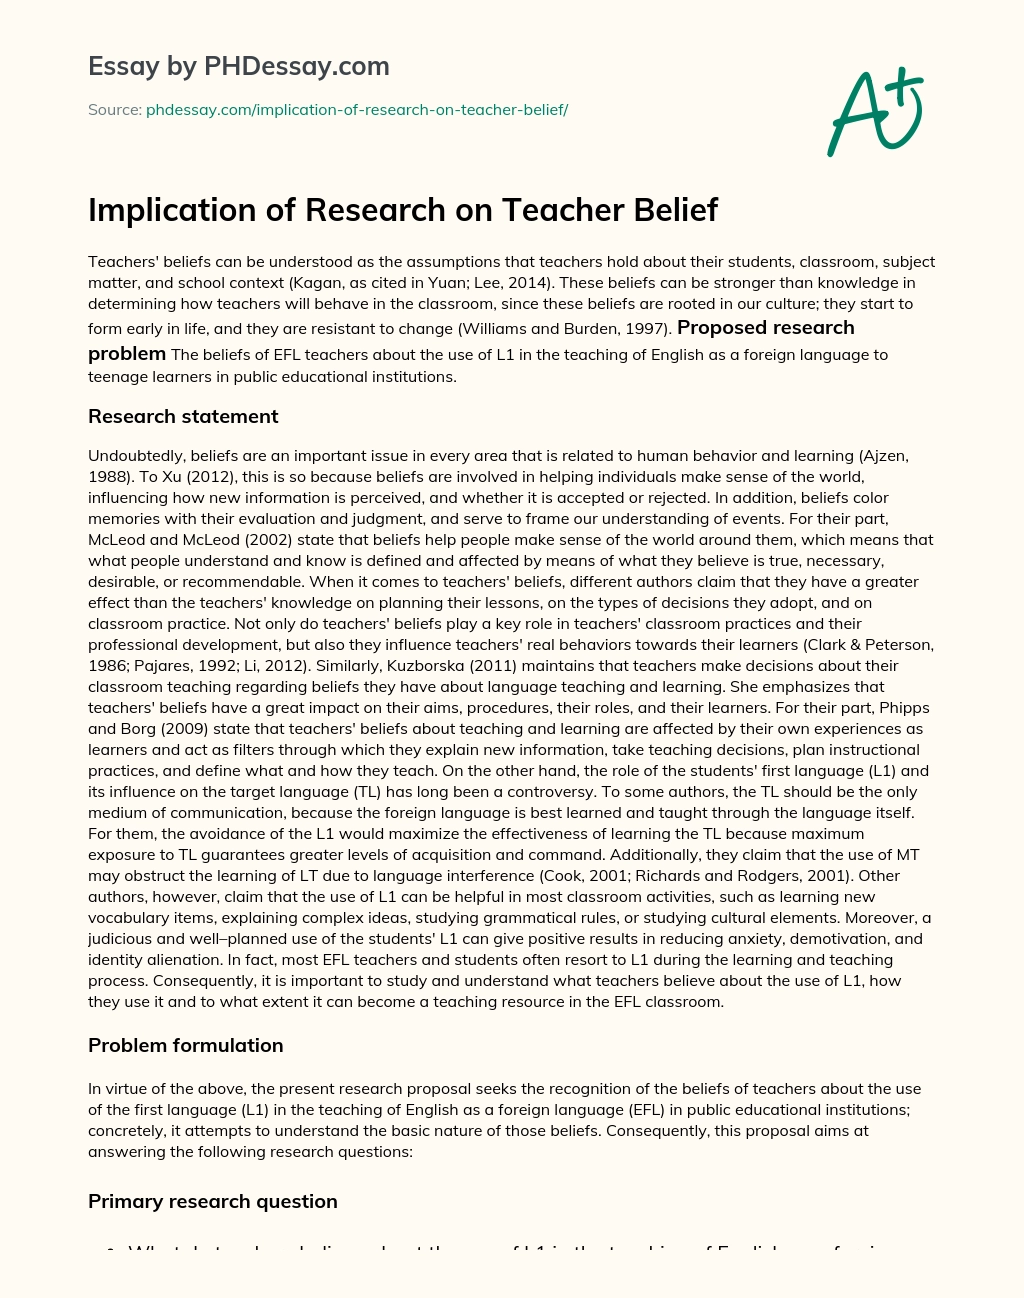 Implication of Research on Teacher Belief essay